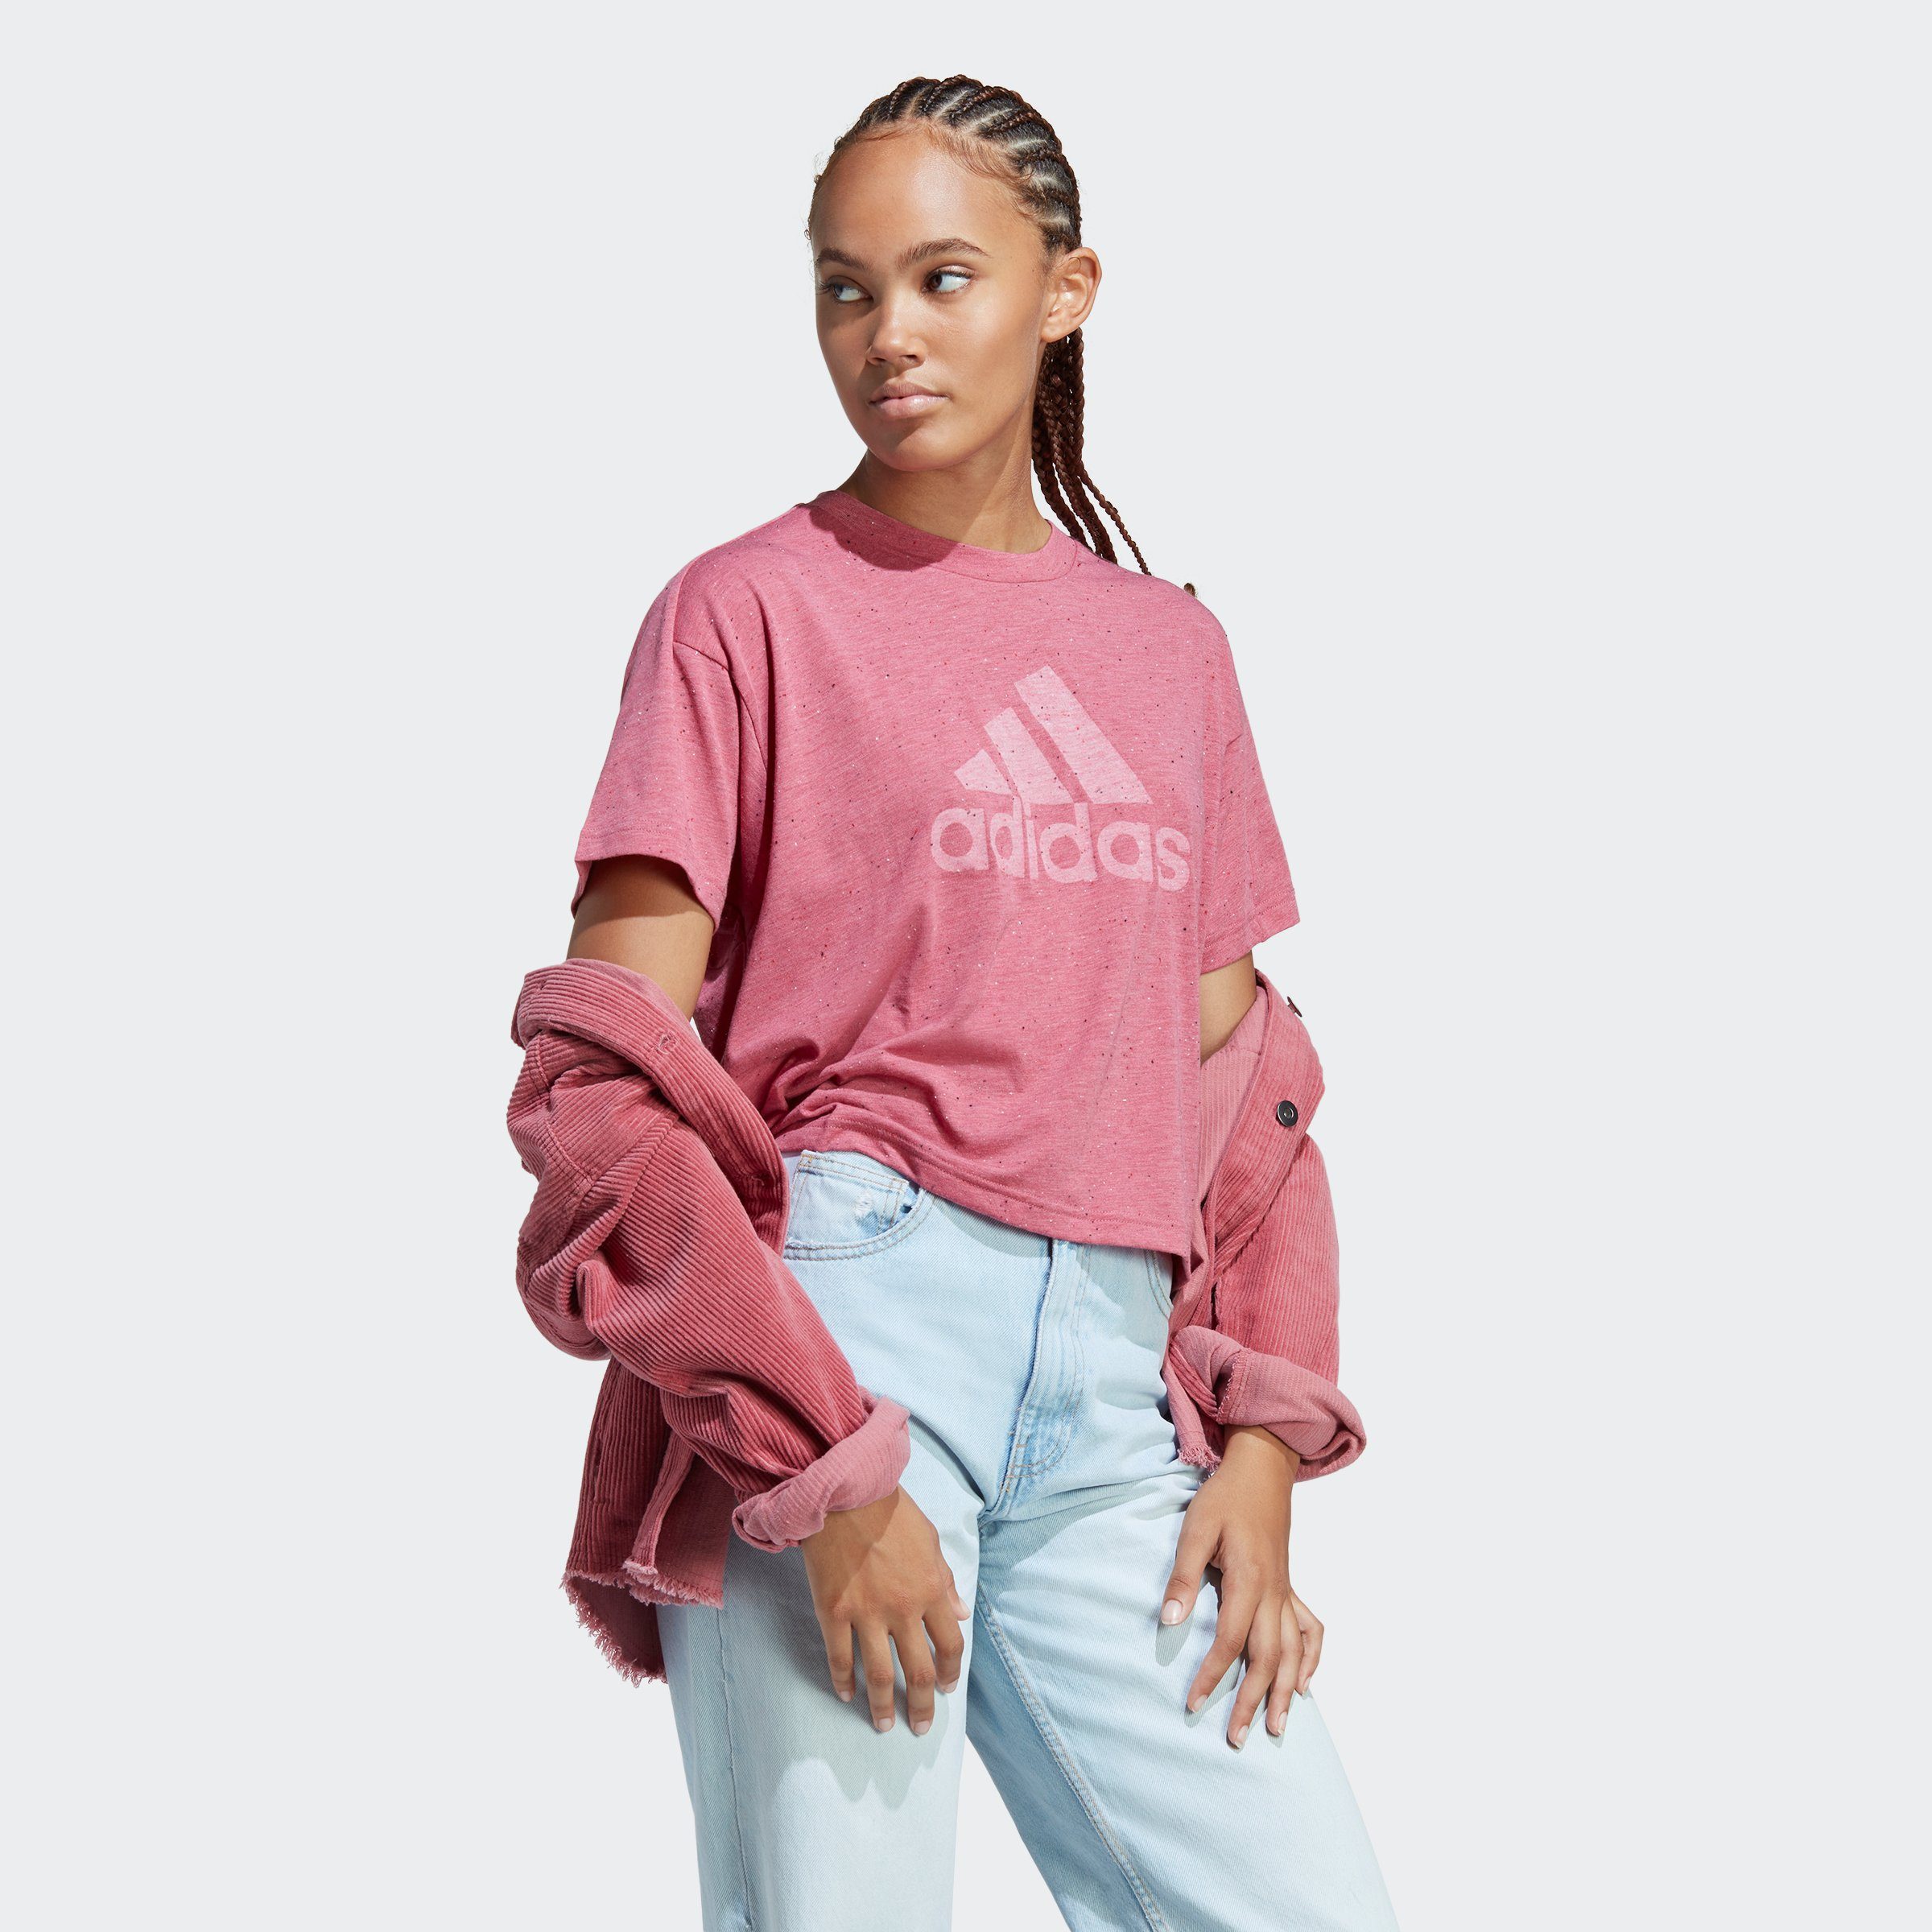 Strata ICONS T-Shirt adidas White Pink Mel. FUTURE / WINNERS Sportswear